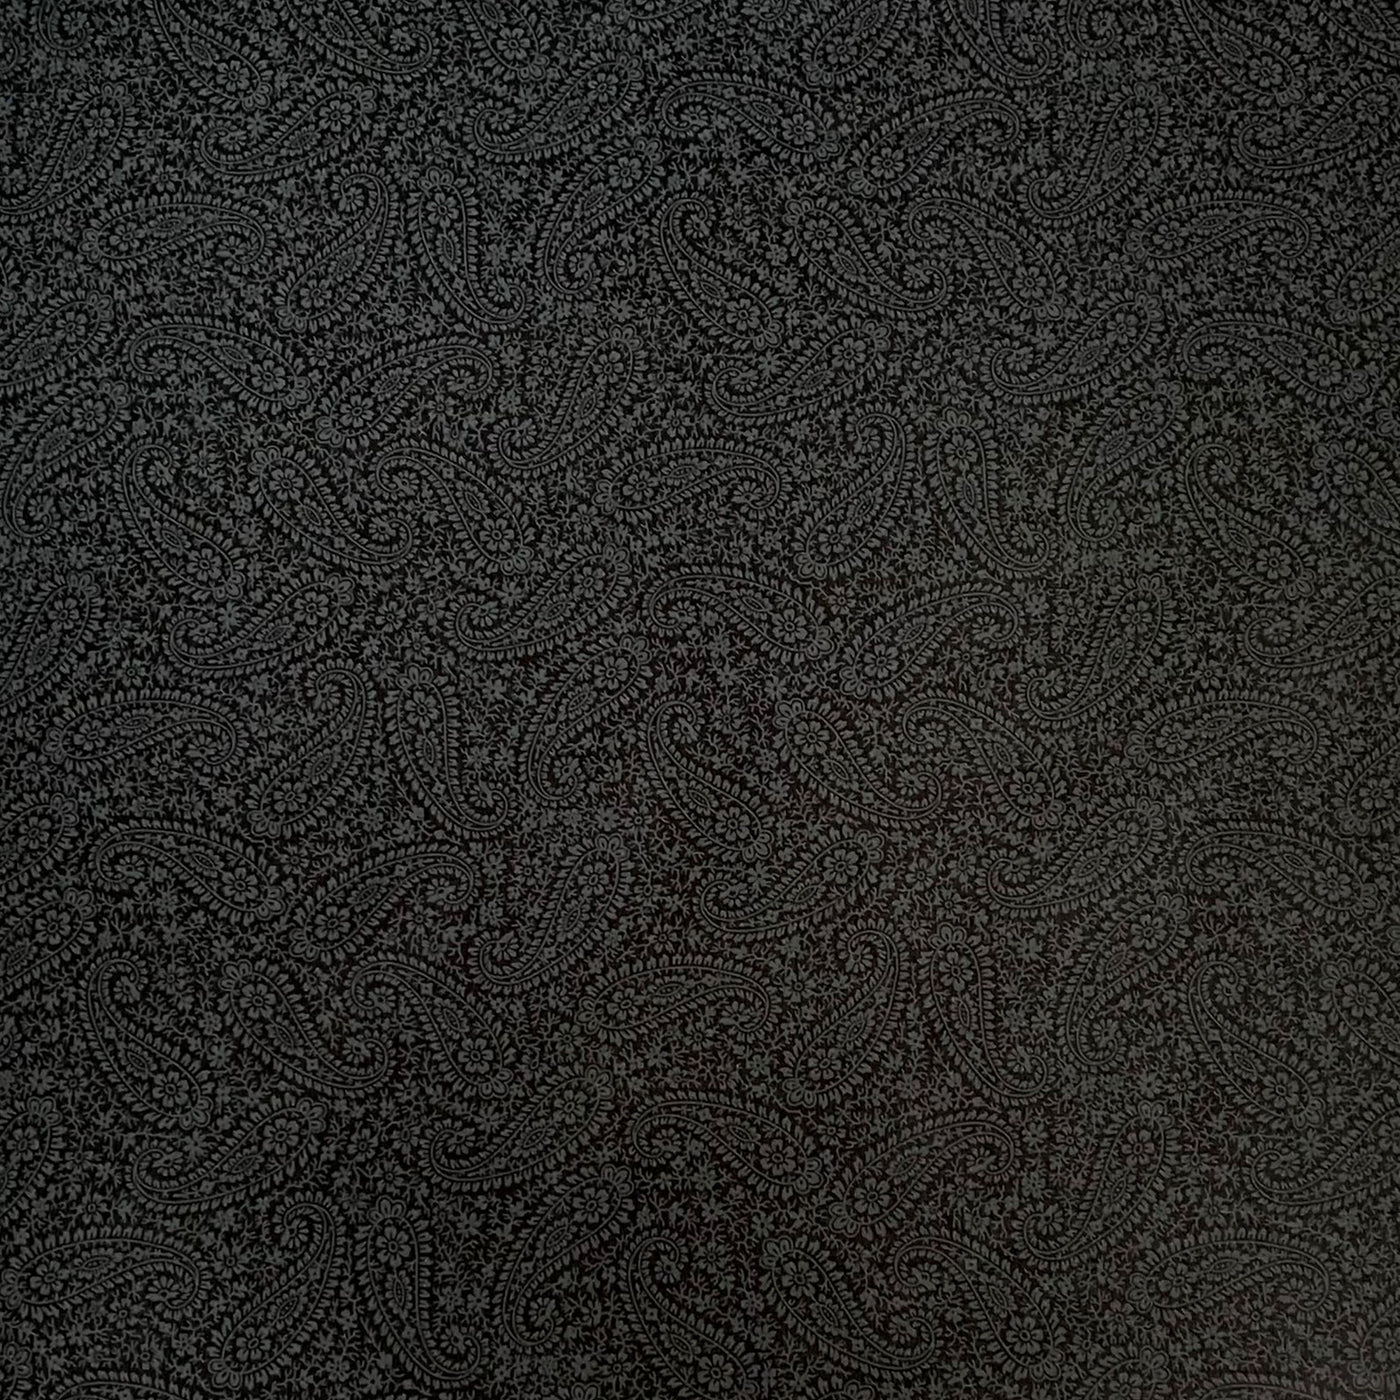 black paisley & daisy patterned fabric, great traditional paisley design, black 100% cotton machine washable fabric